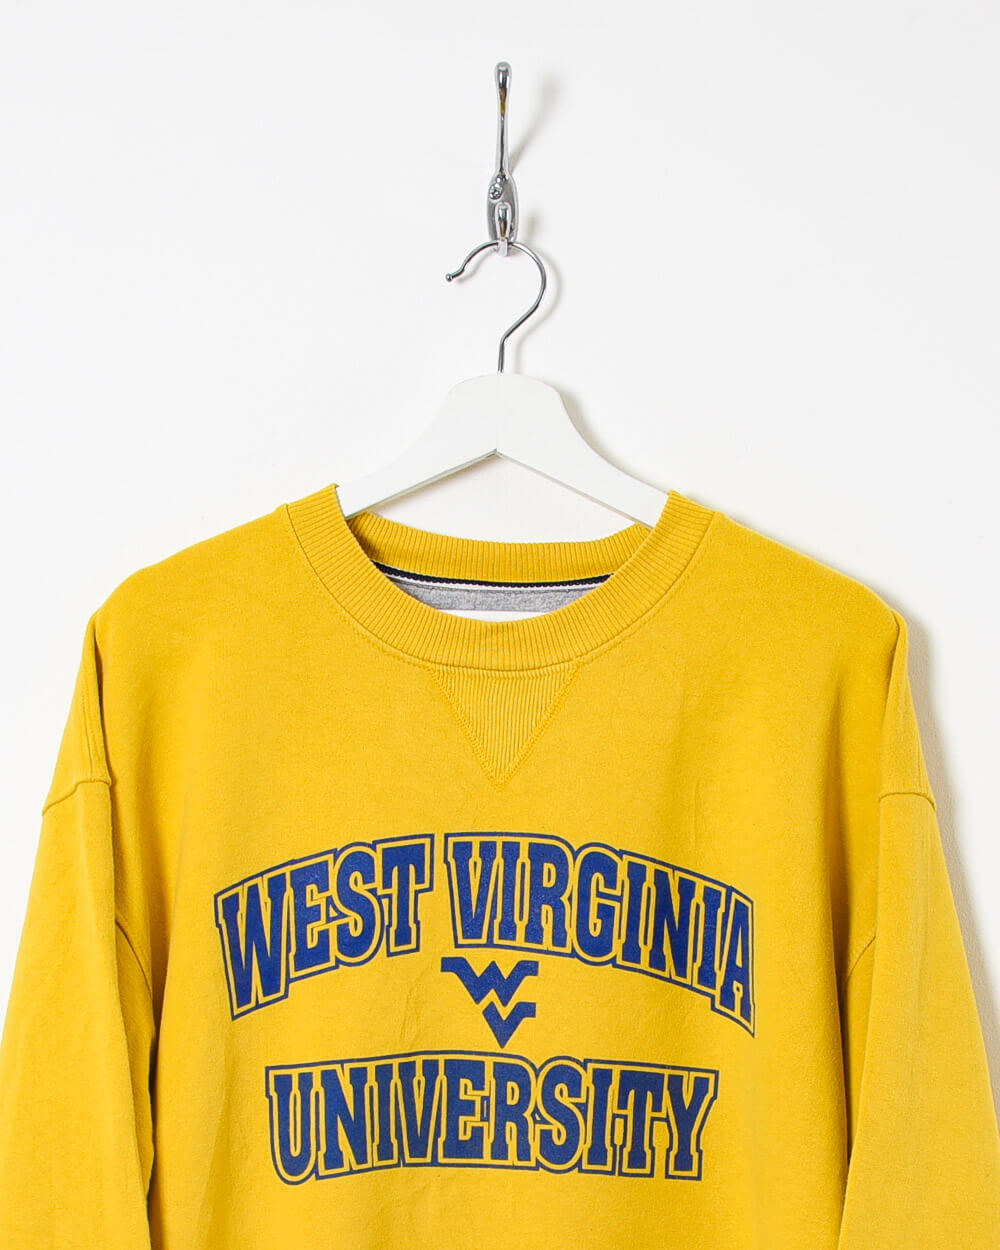 Champion West Virginia University Sweatshirt - Large - Domno Vintage 90s, 80s, 00s Retro and Vintage Clothing 